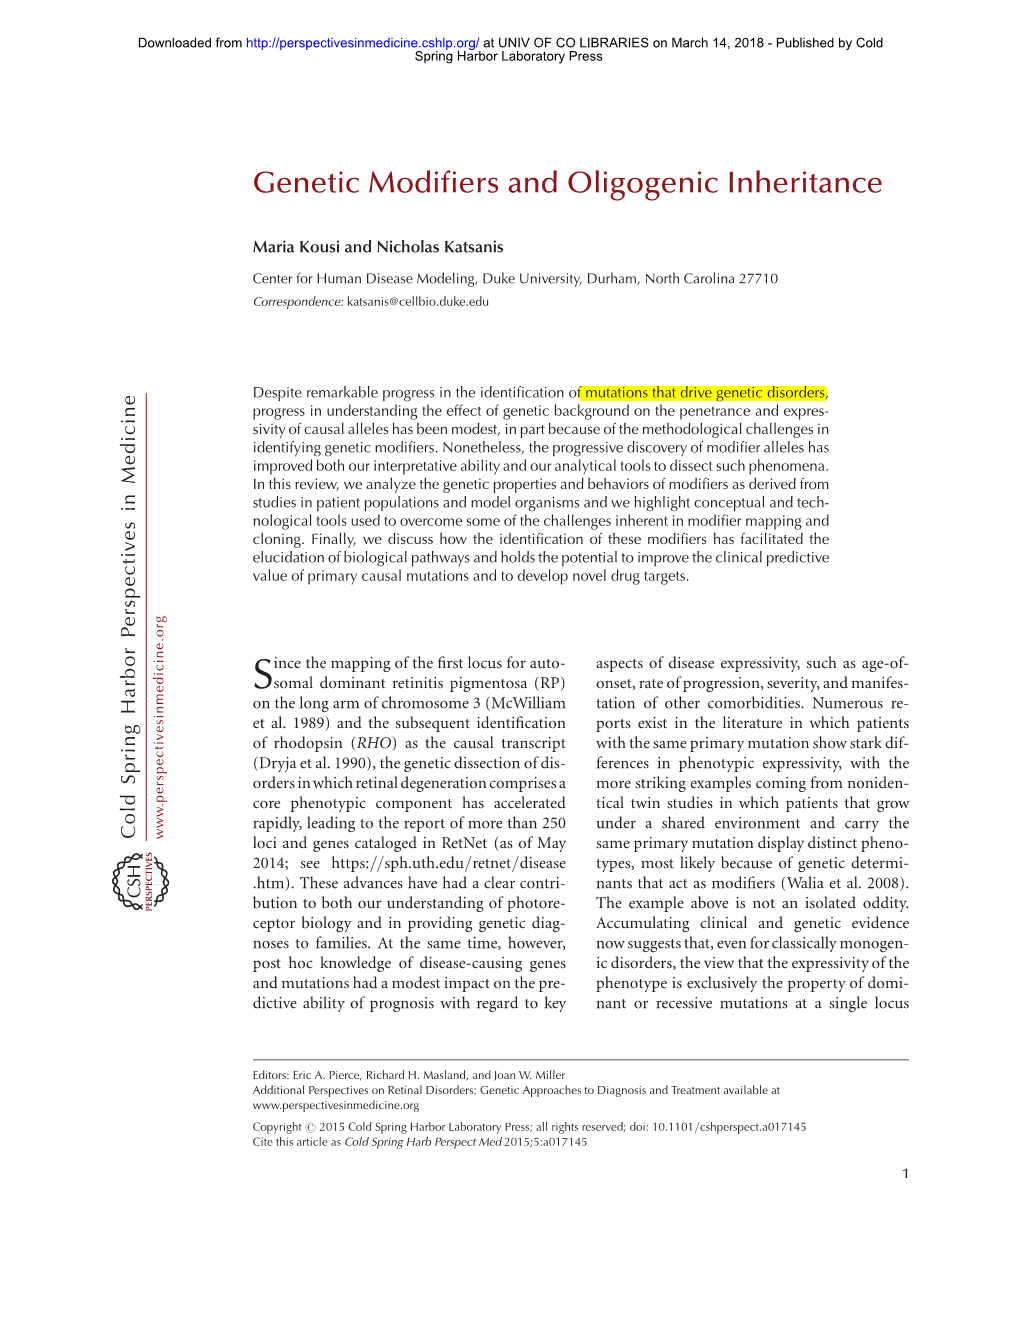 Genetic Modifiers and Oligogenic Traits